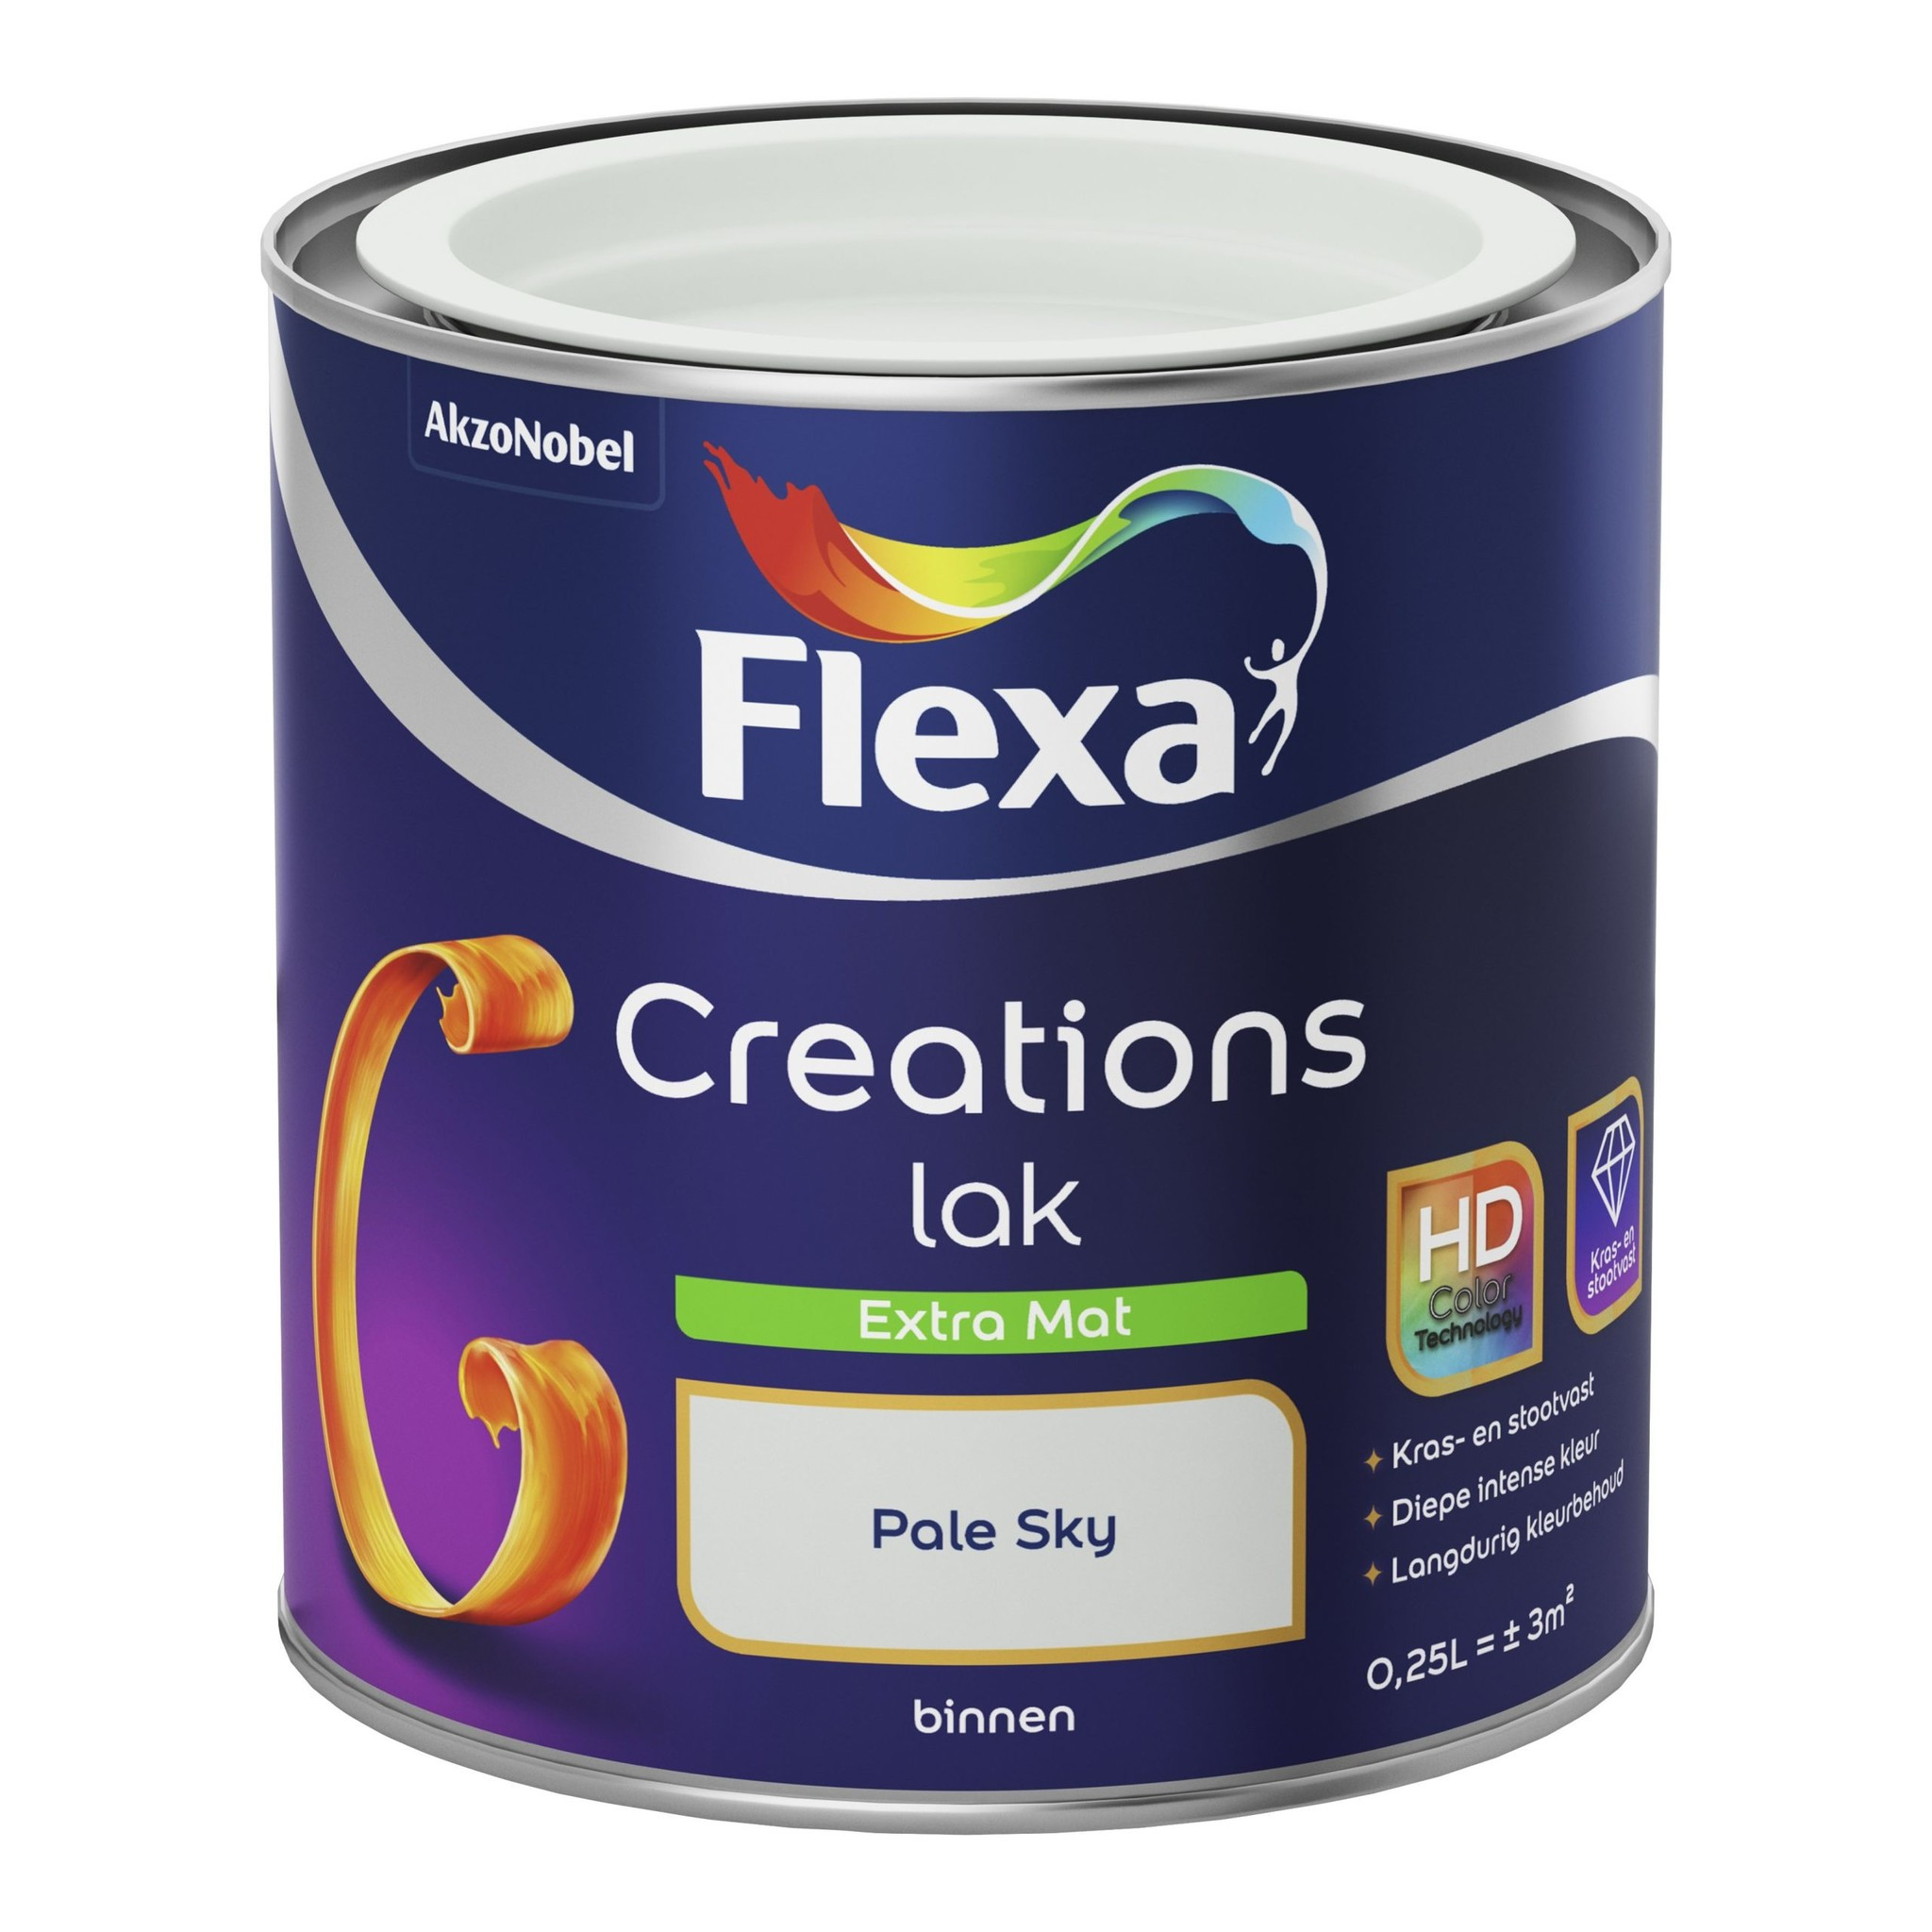 Flexa Creations Lak Extra Mat - Pale Sky